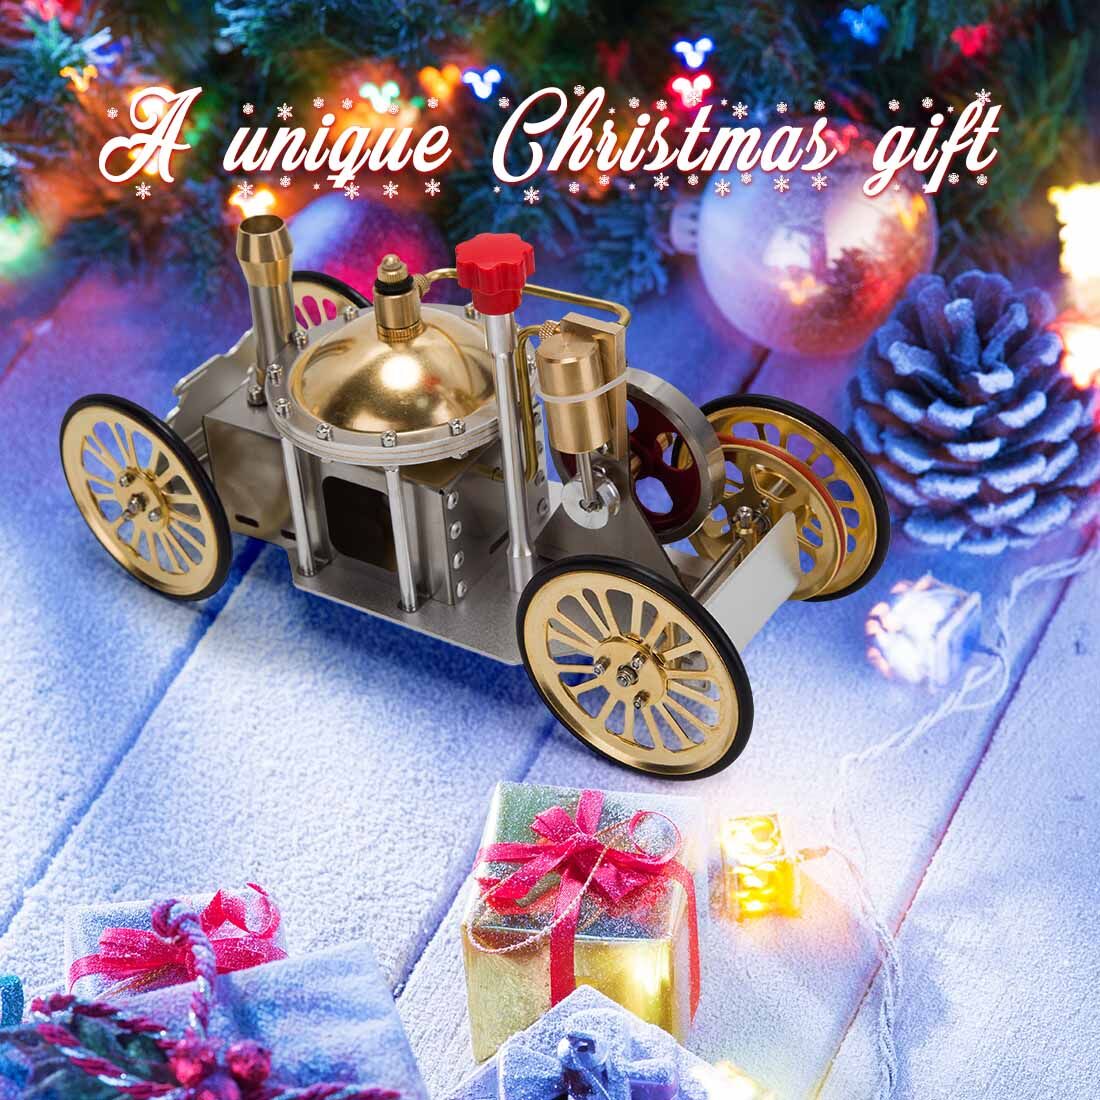 ENJOMOR Christmas Metal Steam-Powered Car Model: A Functional Sci-fi Collectible Gift enginediyshop